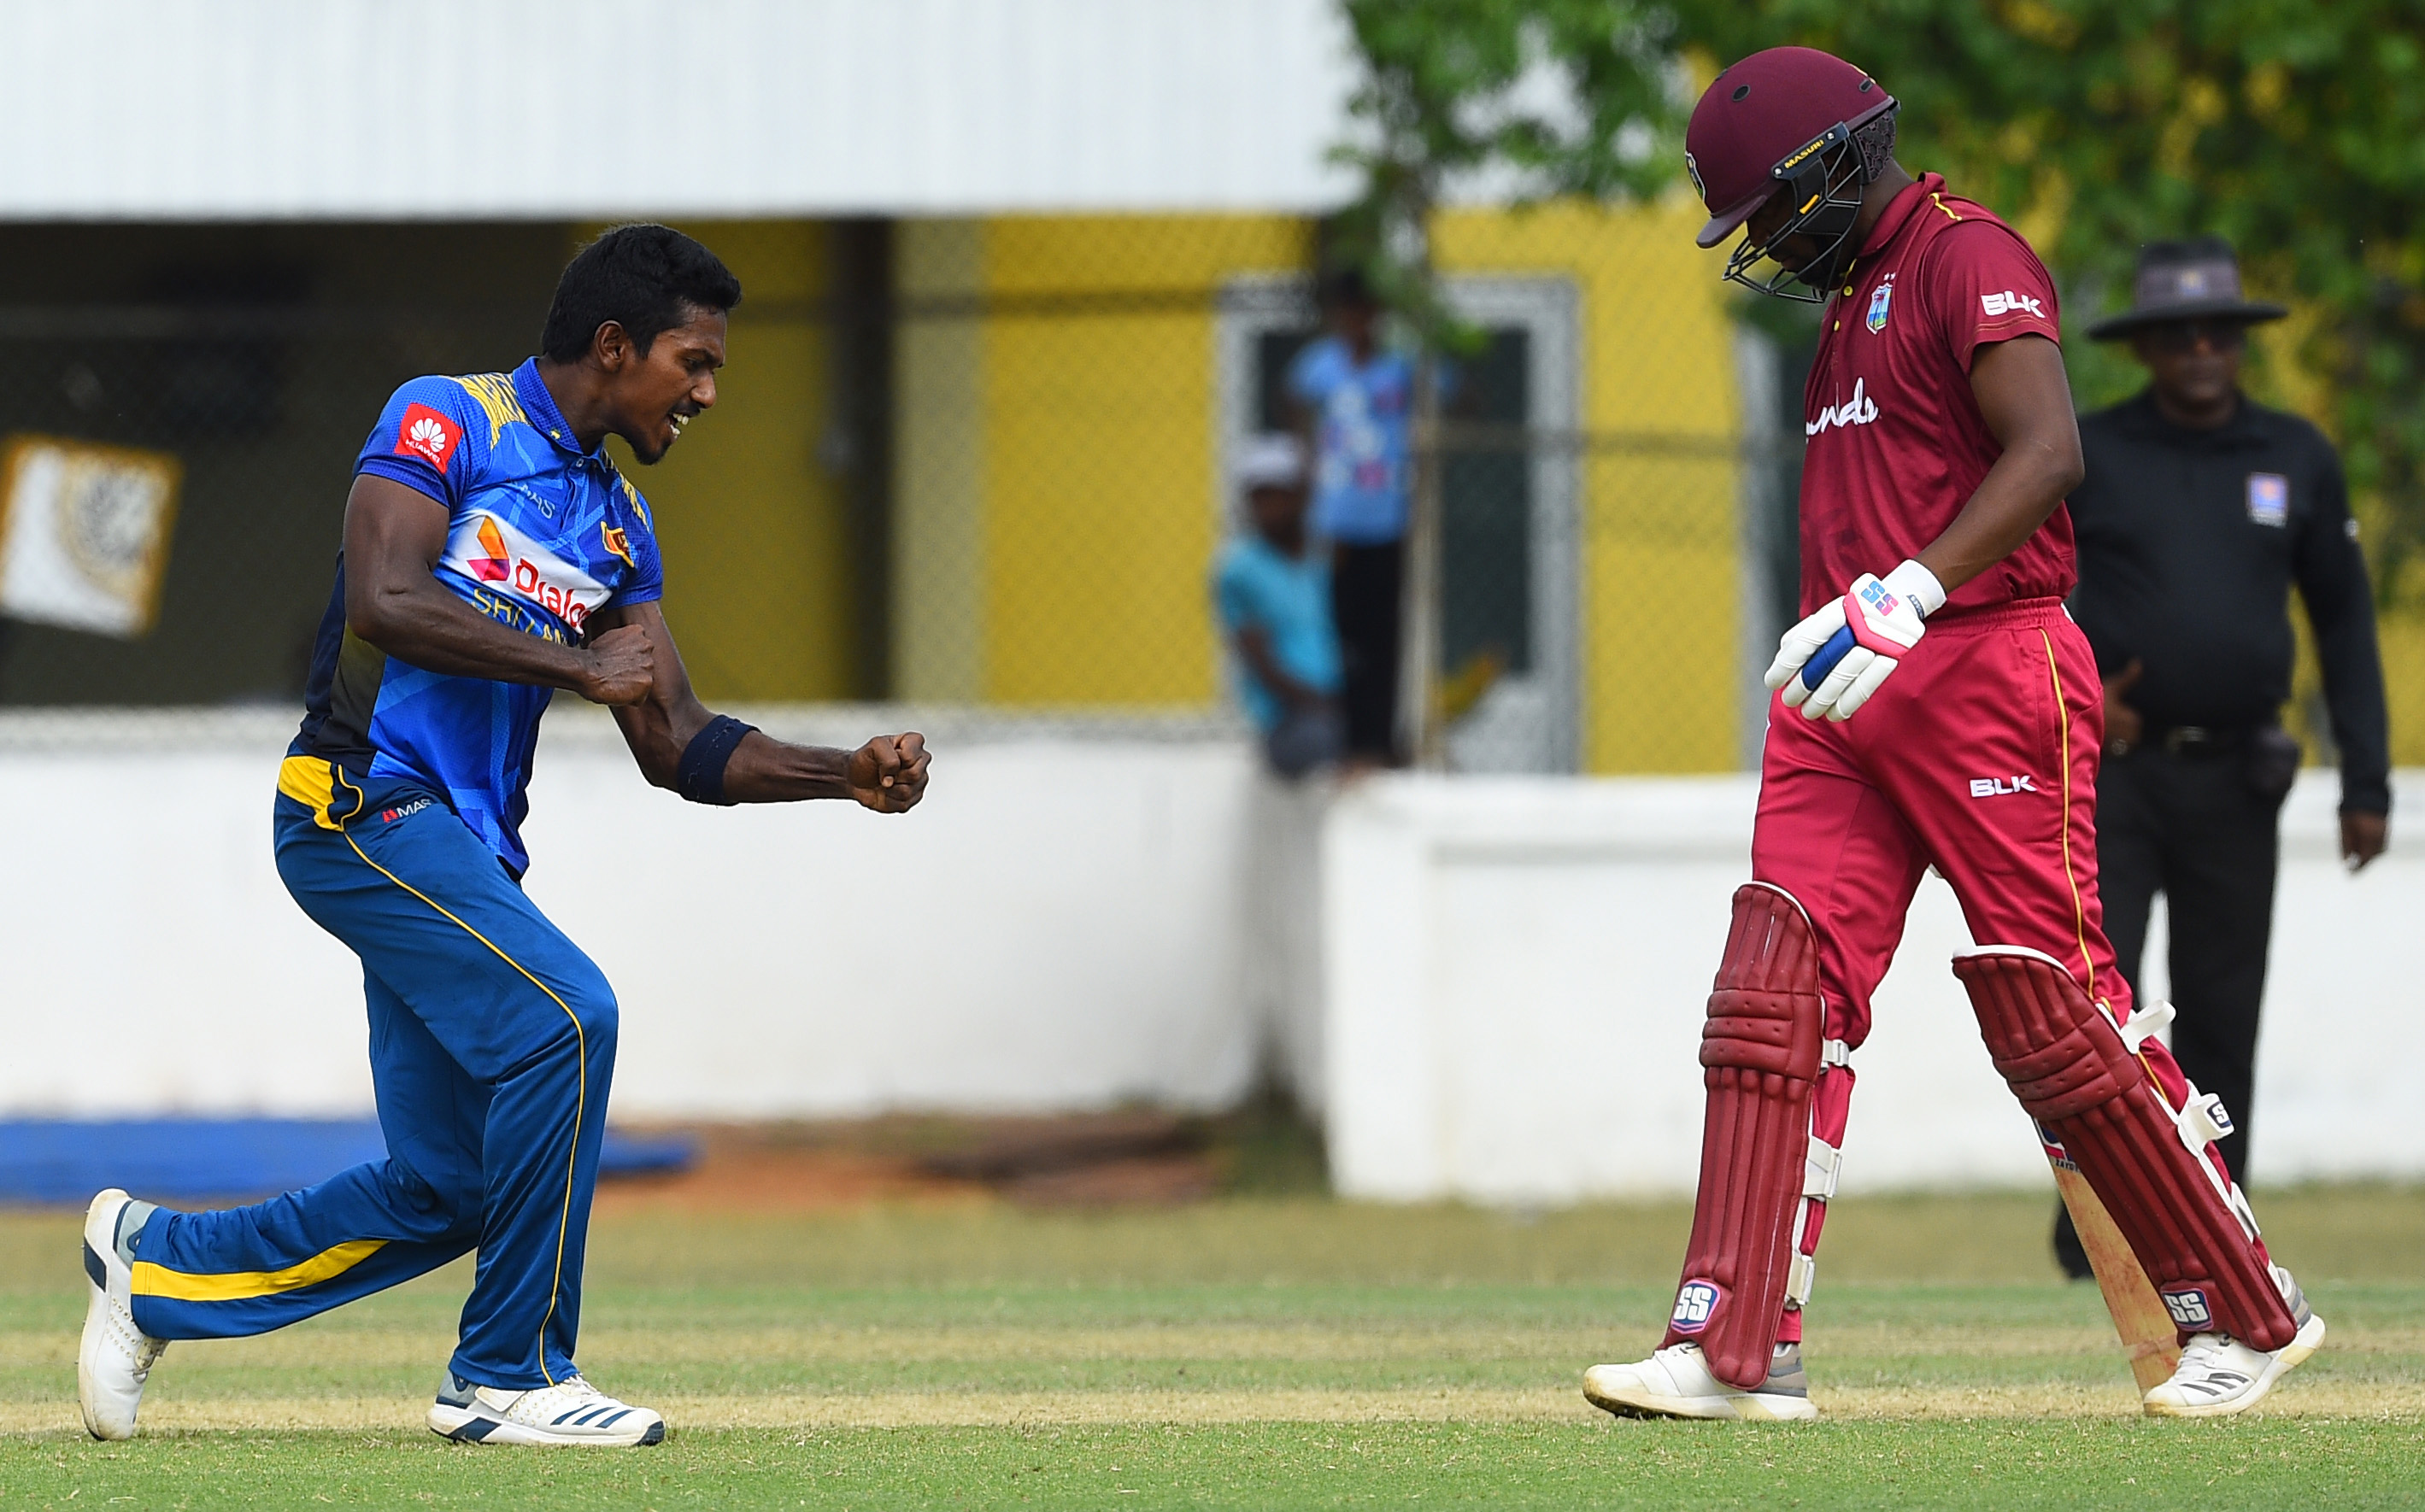 West Indies beat Sri Lanka Board President’s XI by 6 wickets